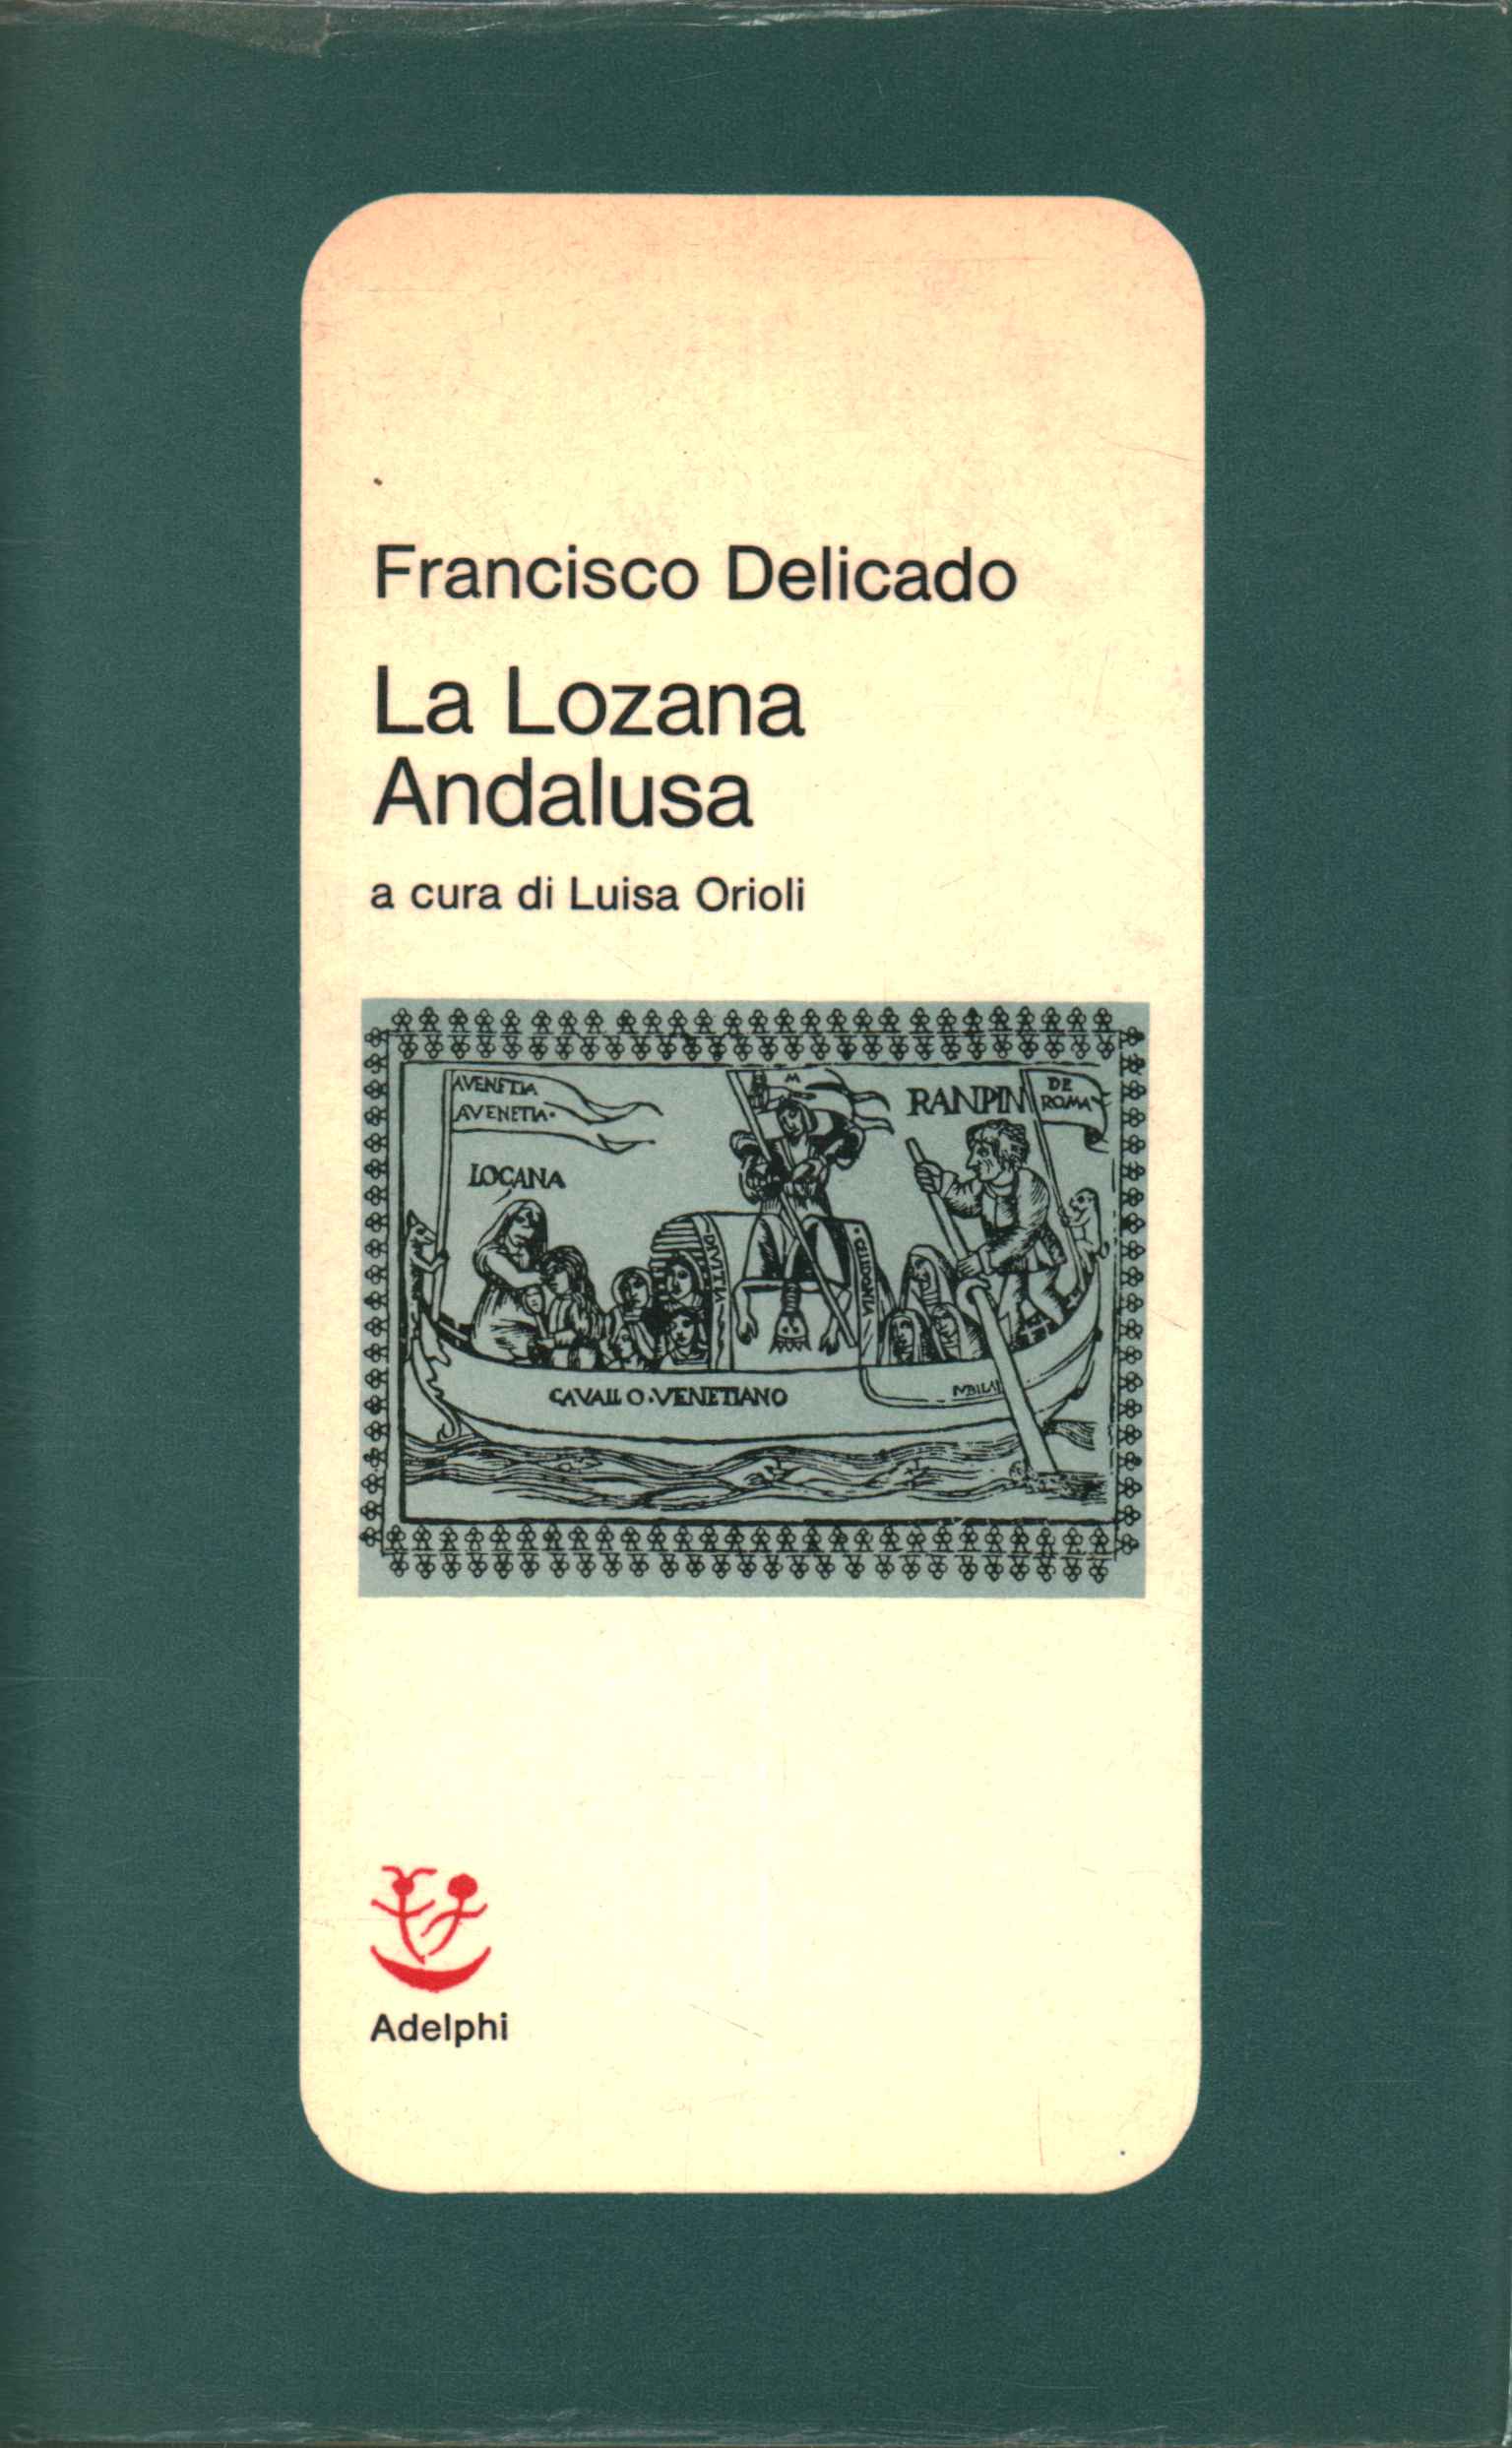 Die andalusische Lozana